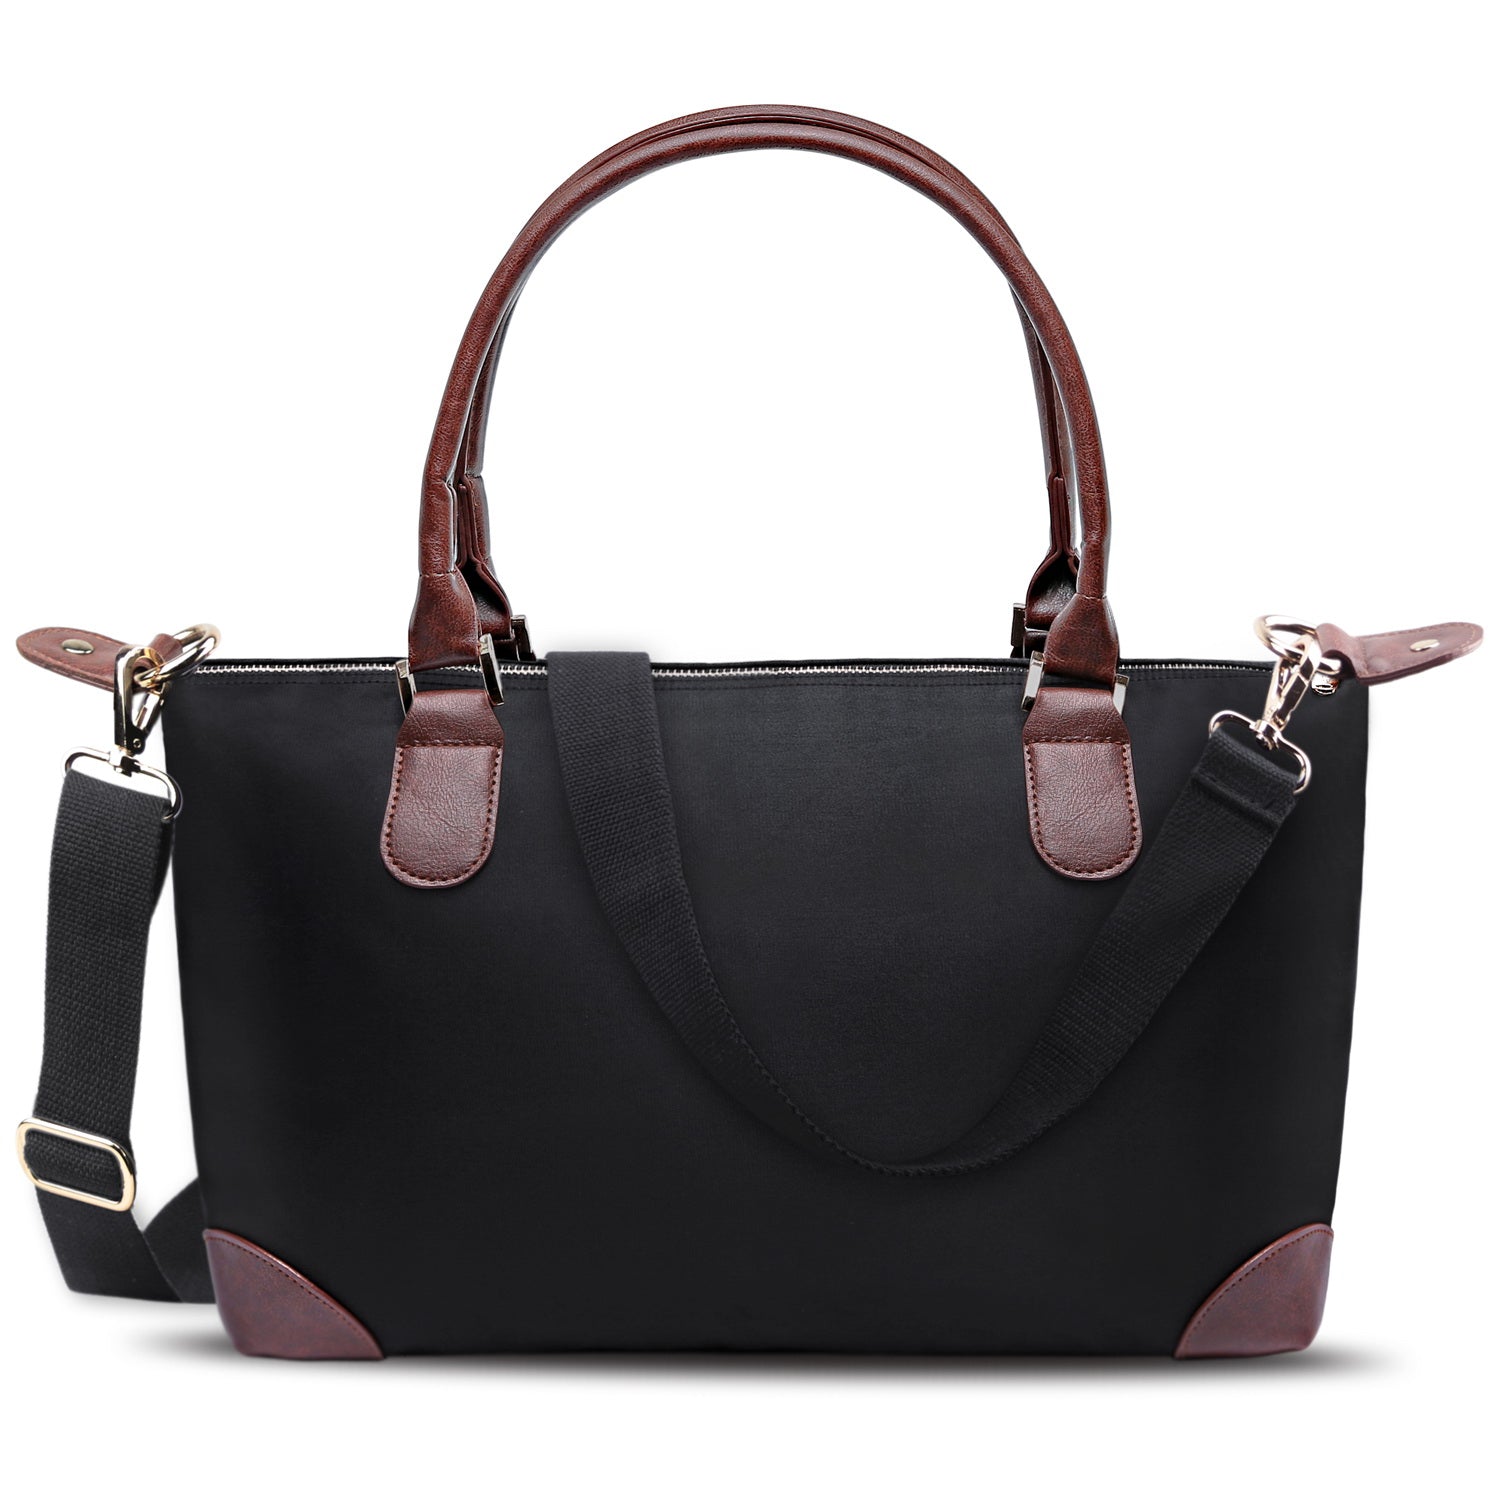 Entchin Tote Bag Women Fashion Nylon Hobo Handbags Stylish